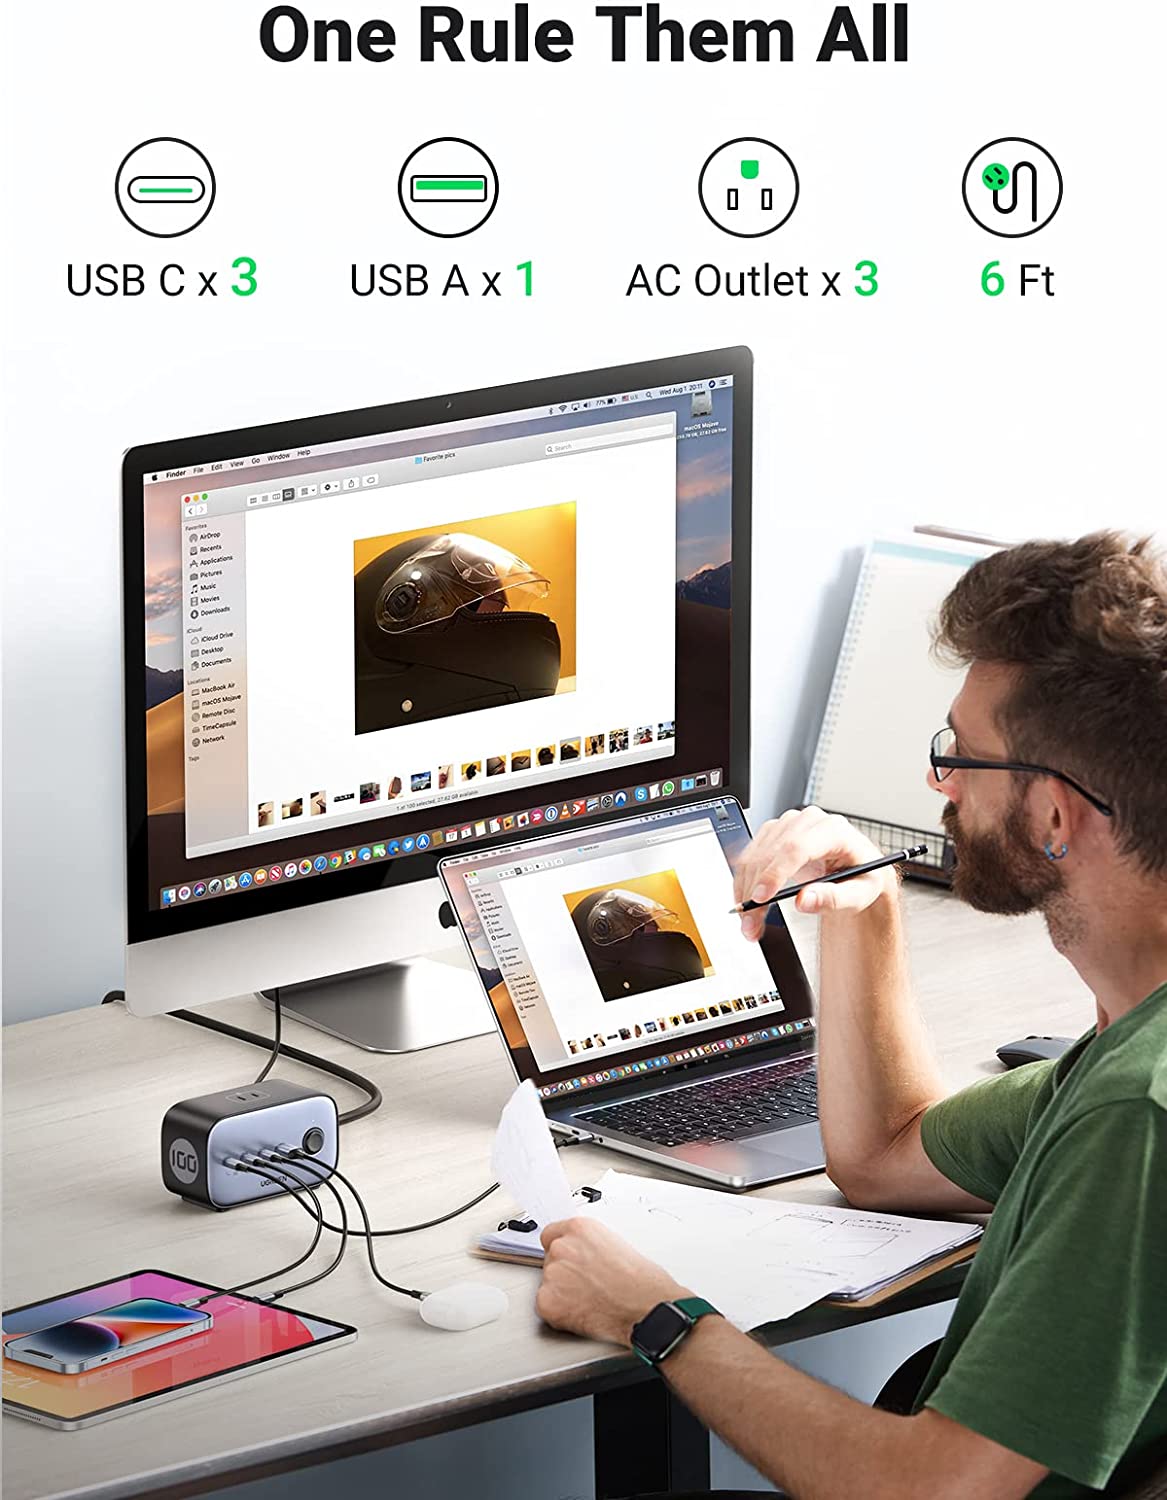 Ugreen 100W USB C GaN Charging Station-7 Ports Desktop Charger